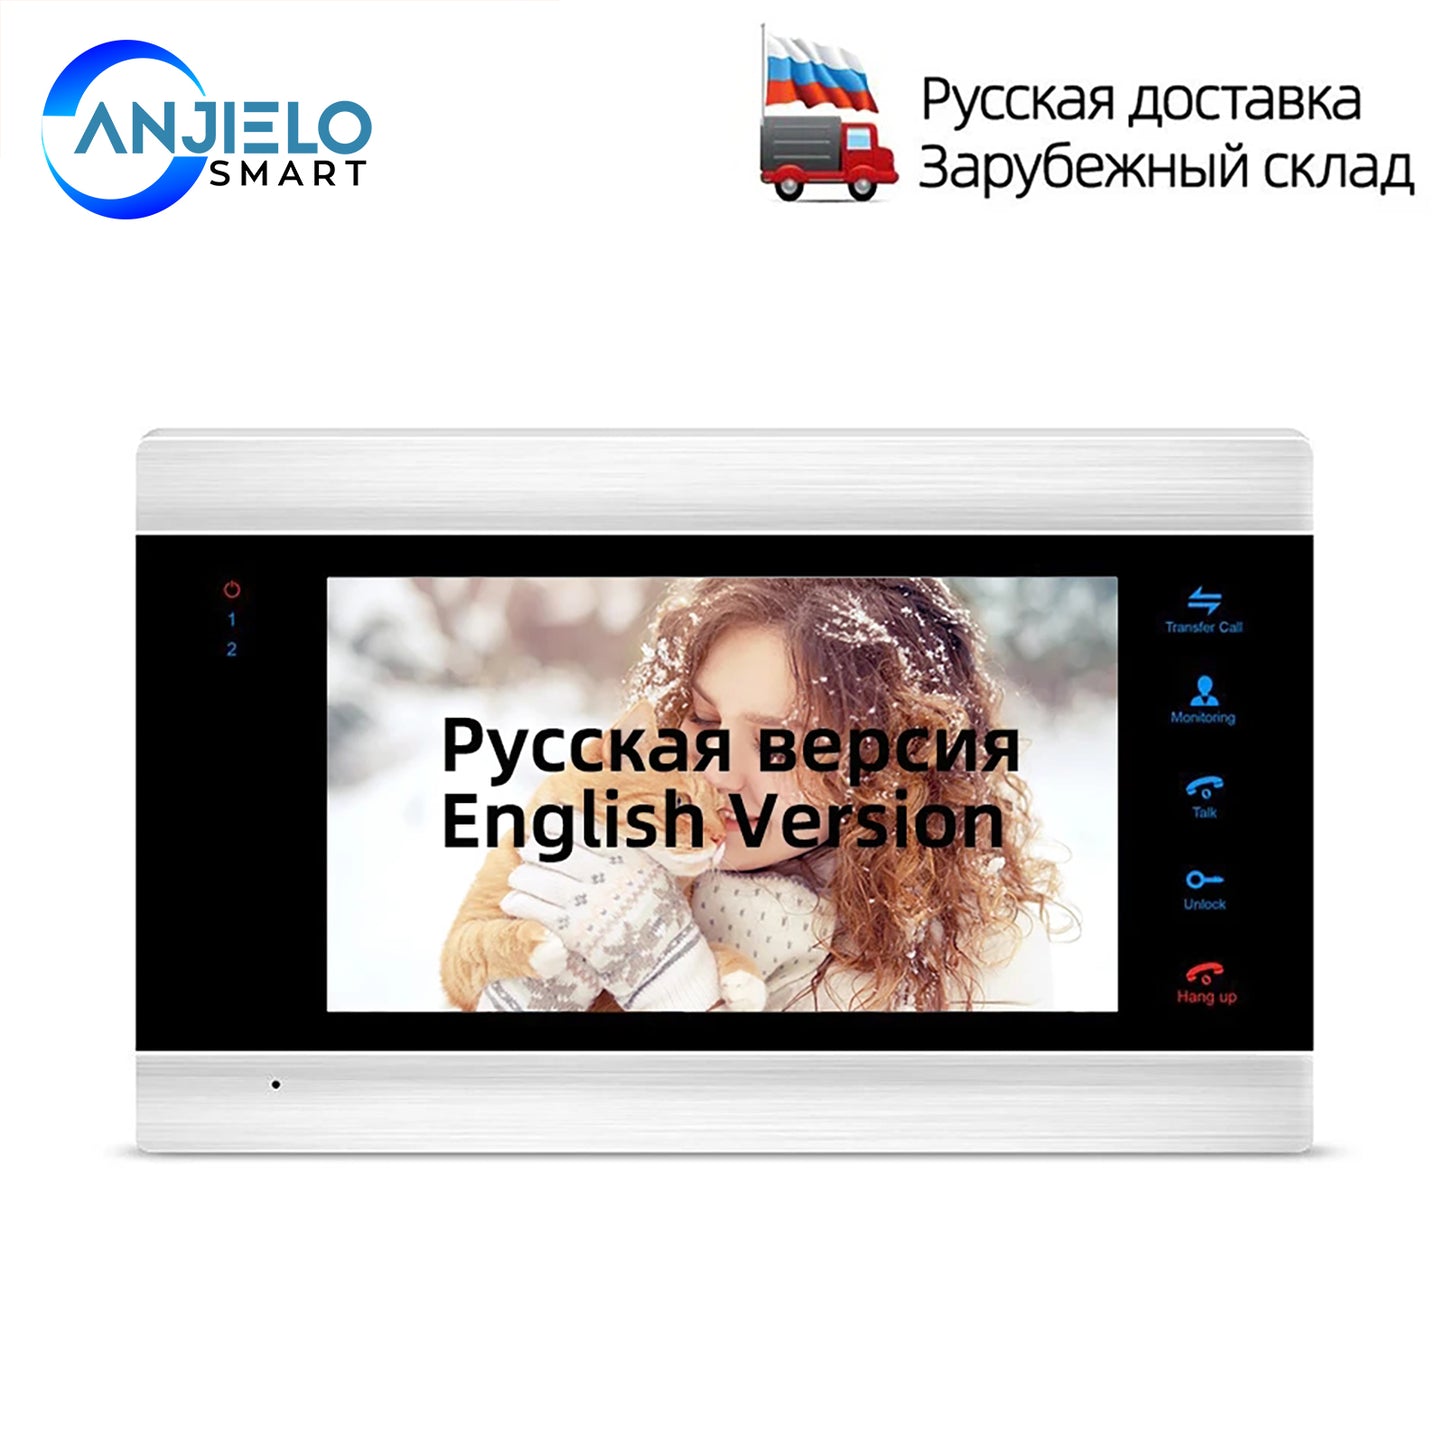 AnjieloSmart 7 inch Indoor Monitor Video Intercom Doorbell System Photo Video Recording Wall Mounting Monitor